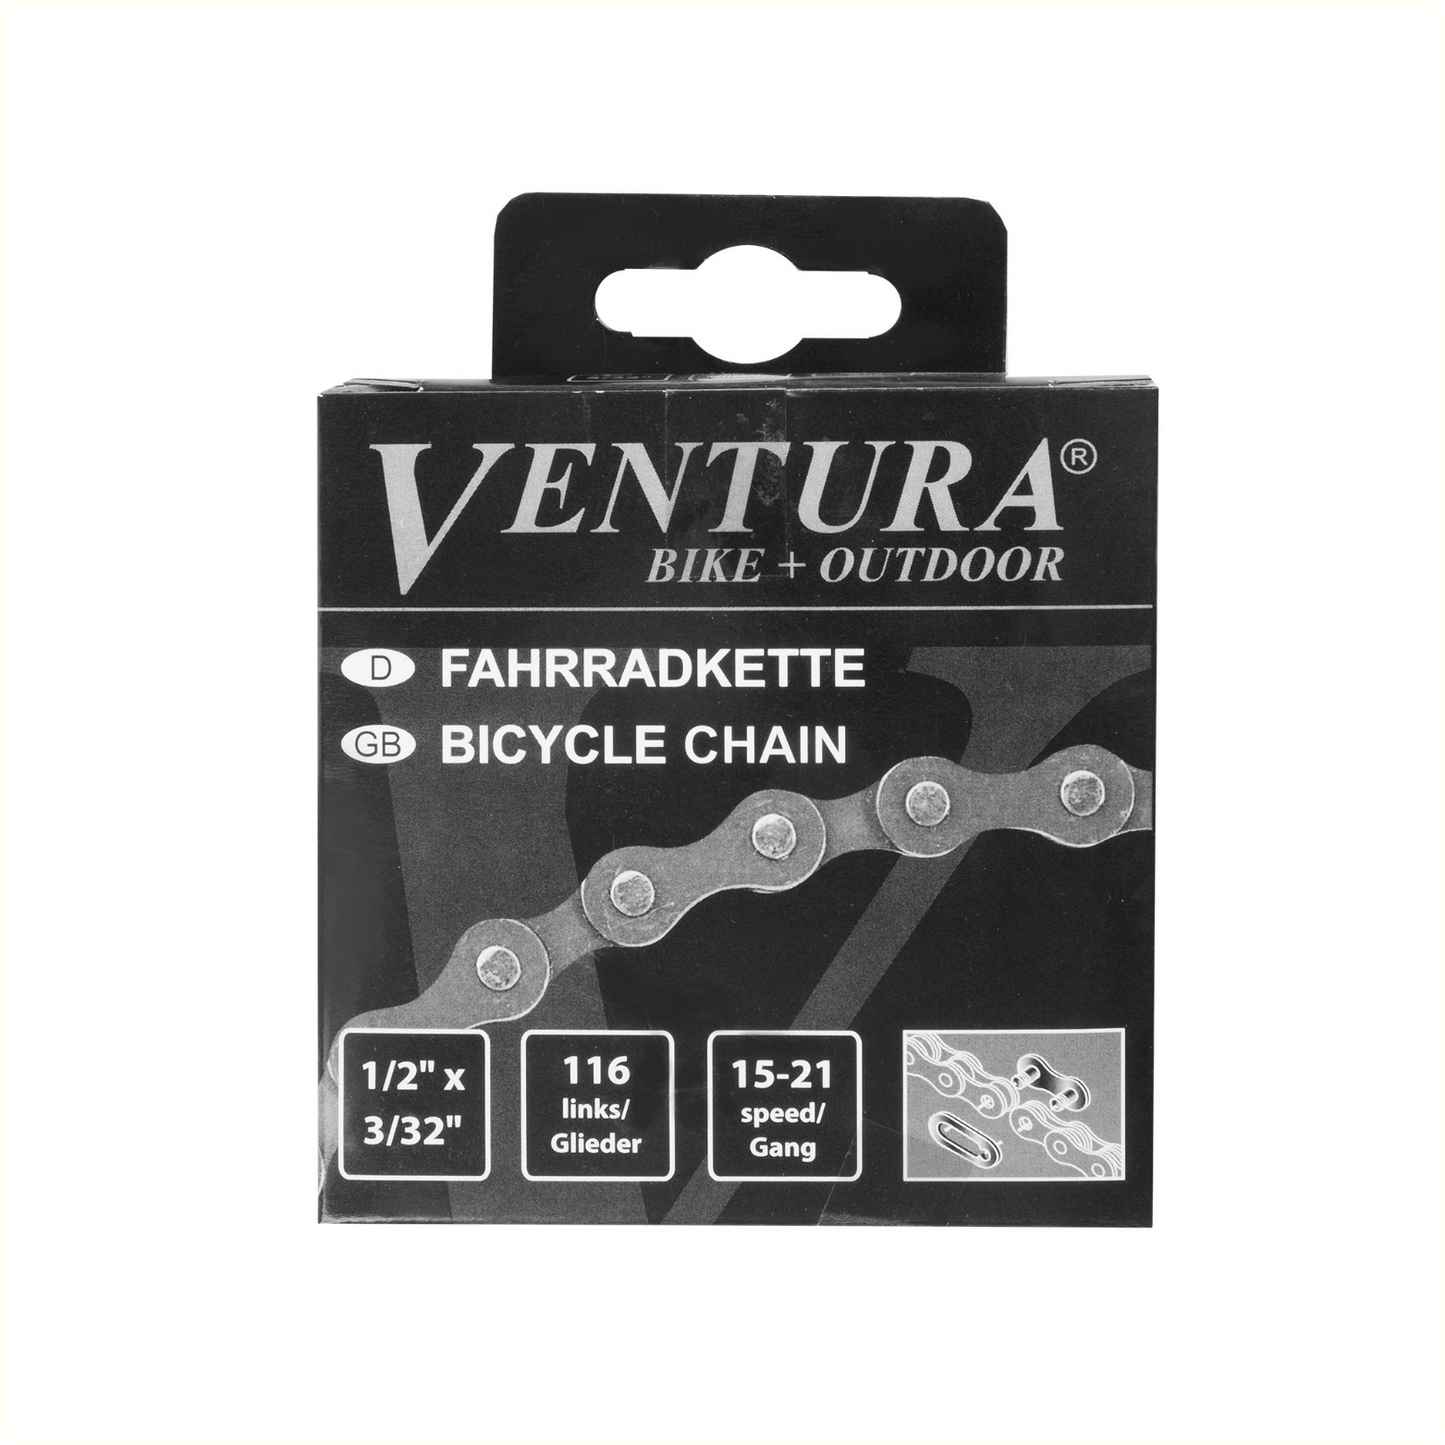 Collar Ventura FD1002A - 6 7sp - 1 2 x 3 32 - 116 enlaces - gris